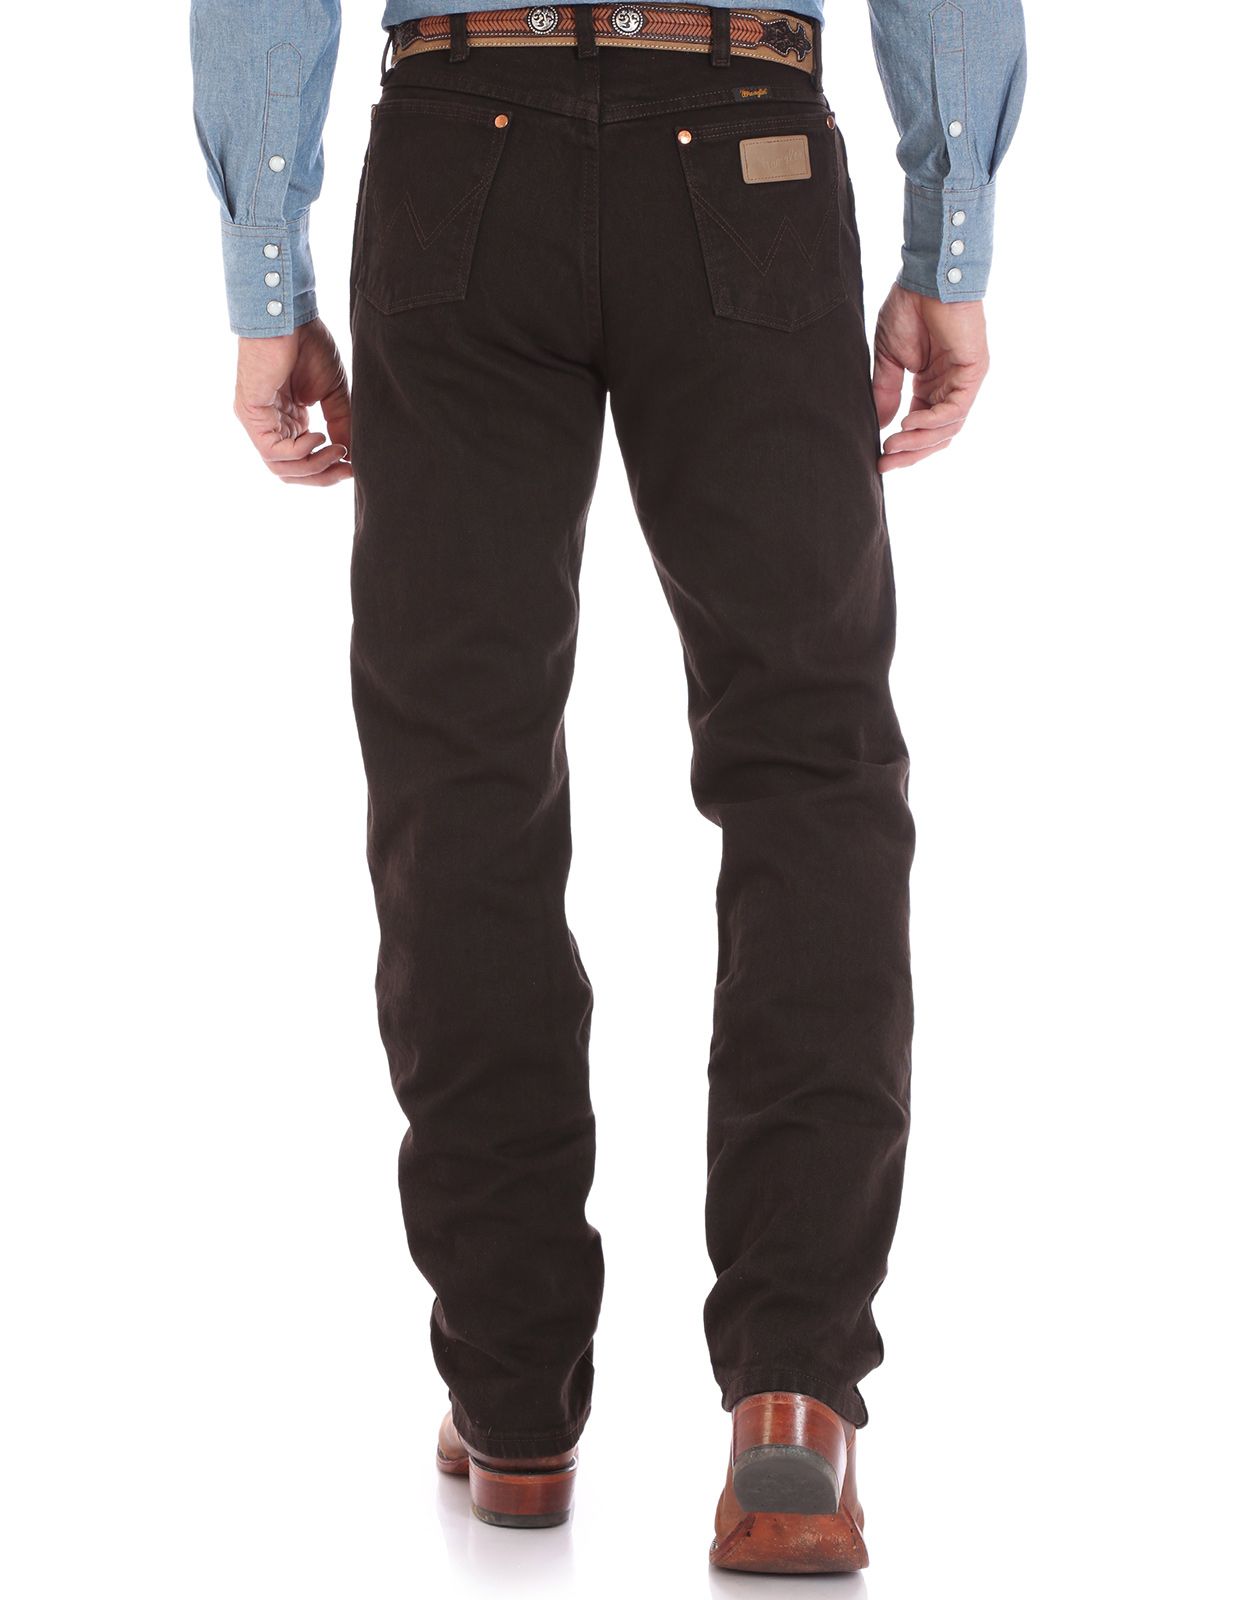 Wrangler Men's 13 Original High Rise Regular Fit Boot Cut Jeans - Black  Chocolate